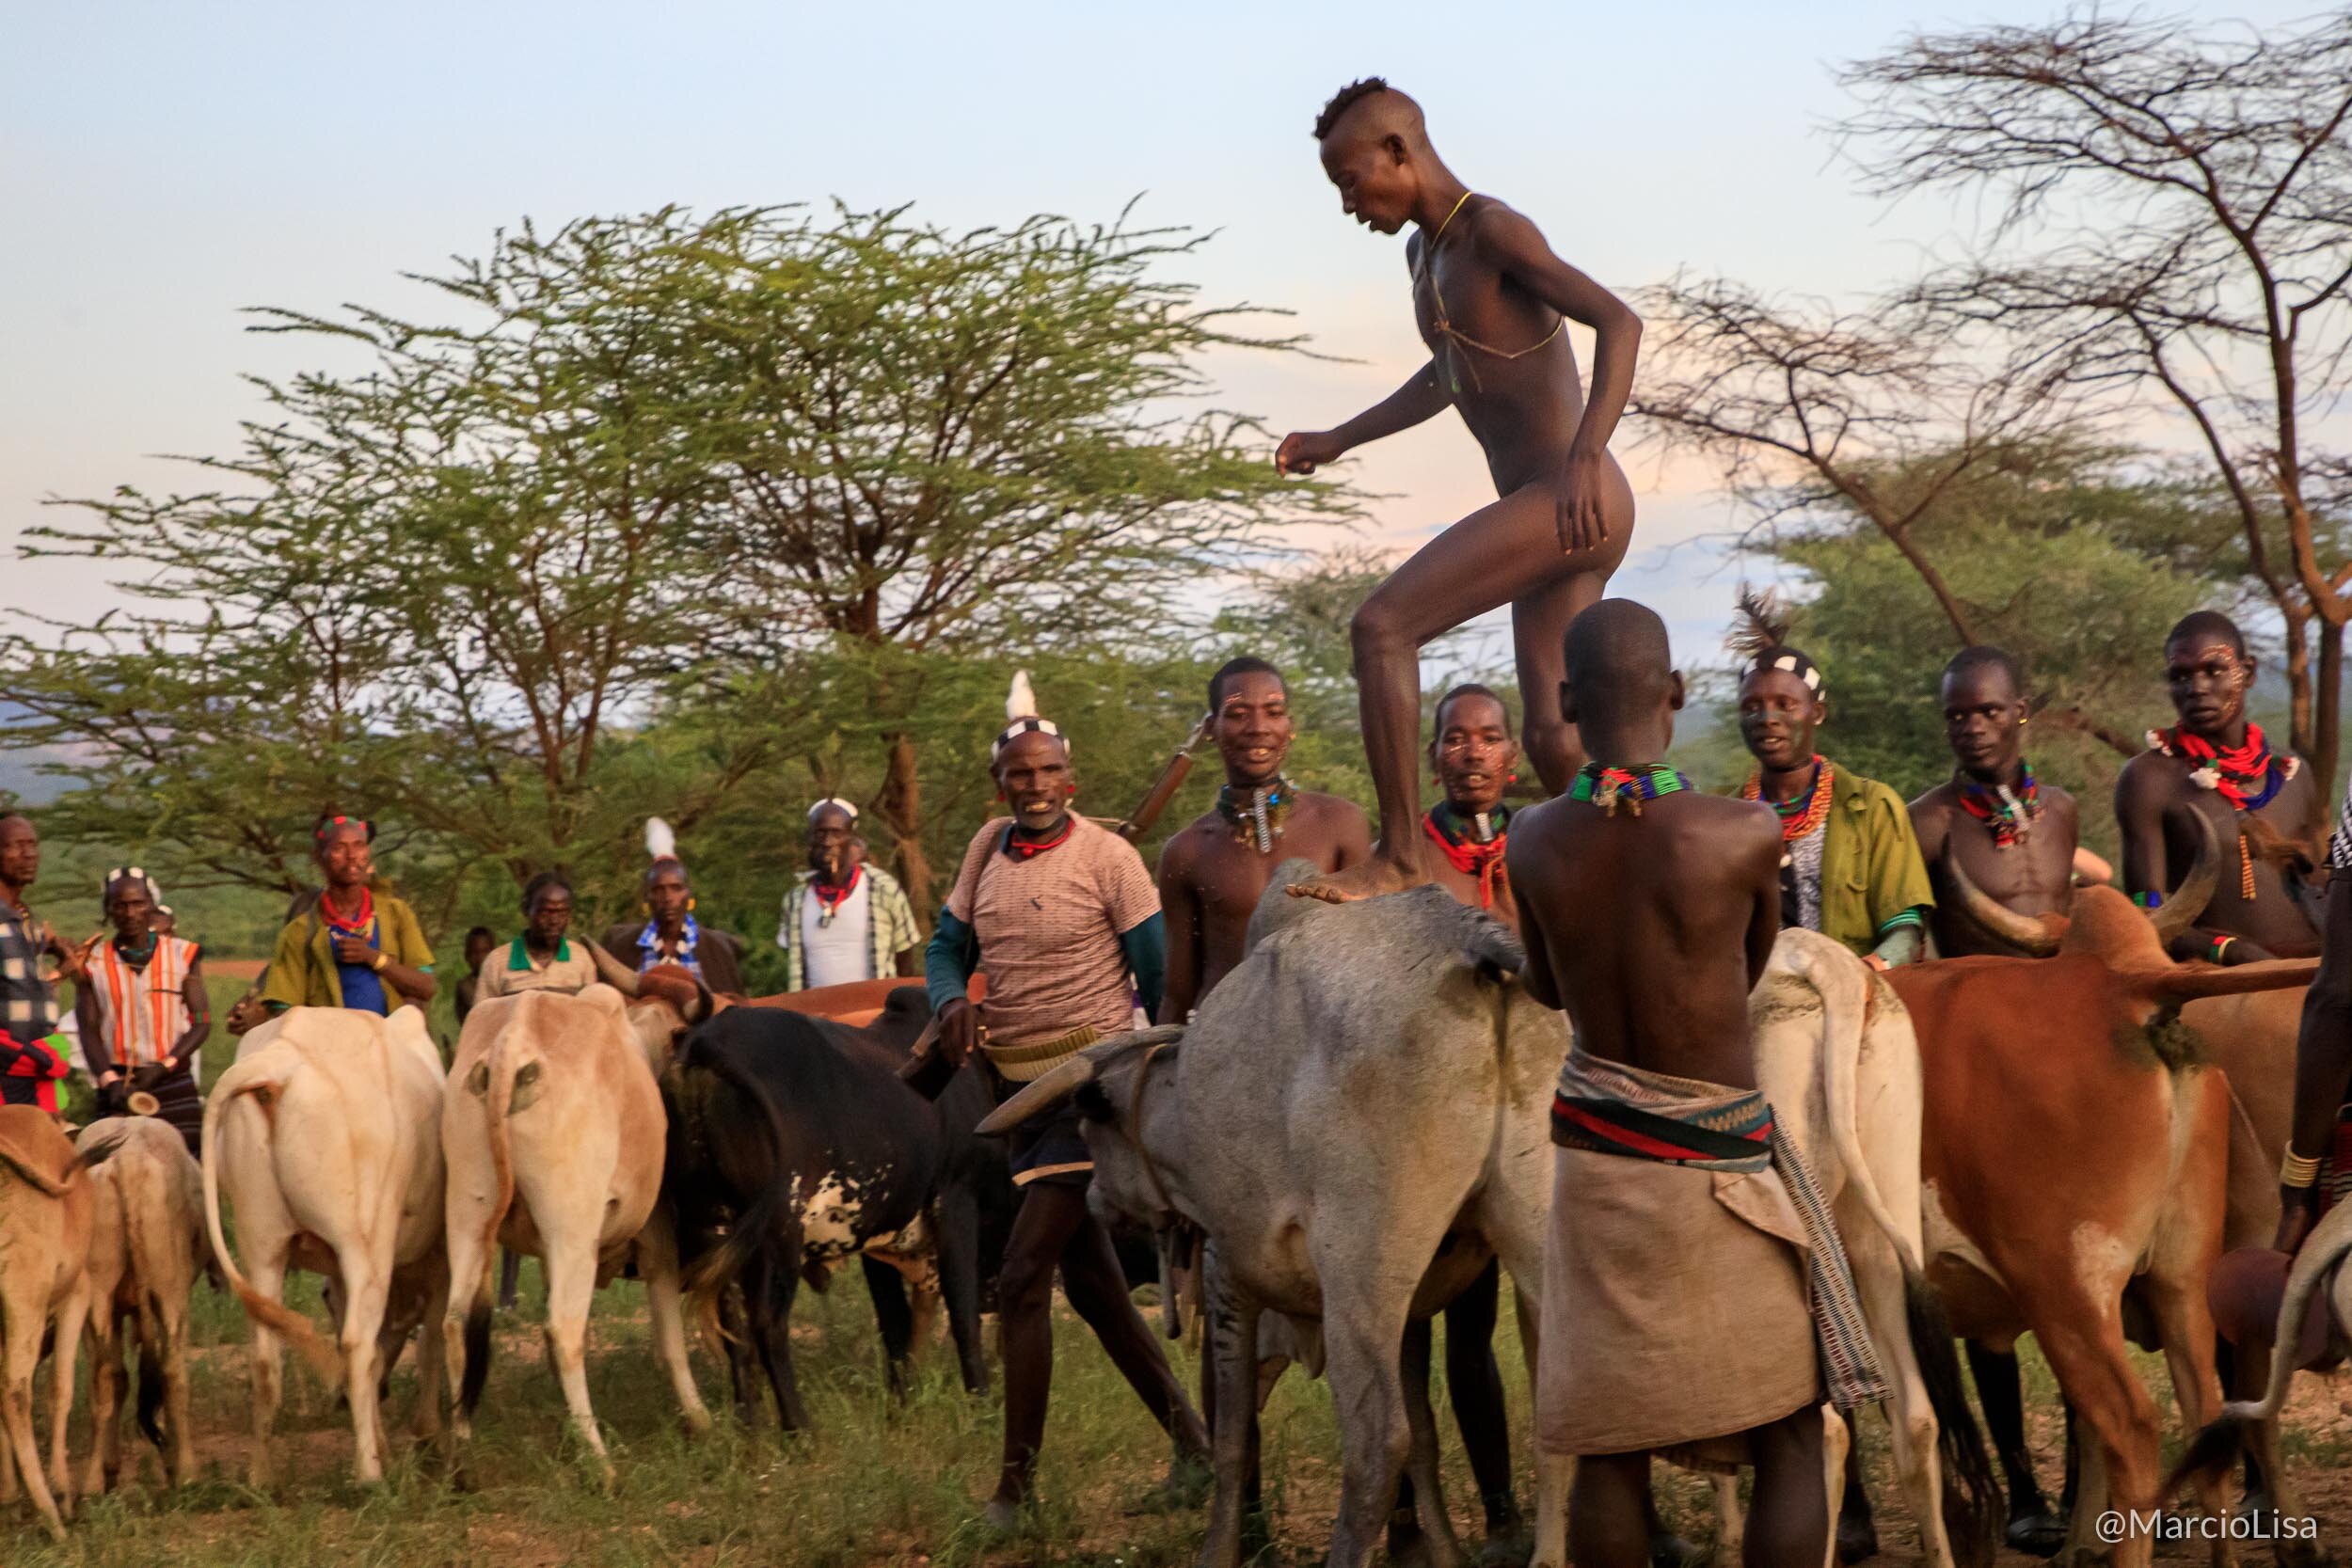 Rito de passagem Bull jumping na tribo Hamer, Etiópia